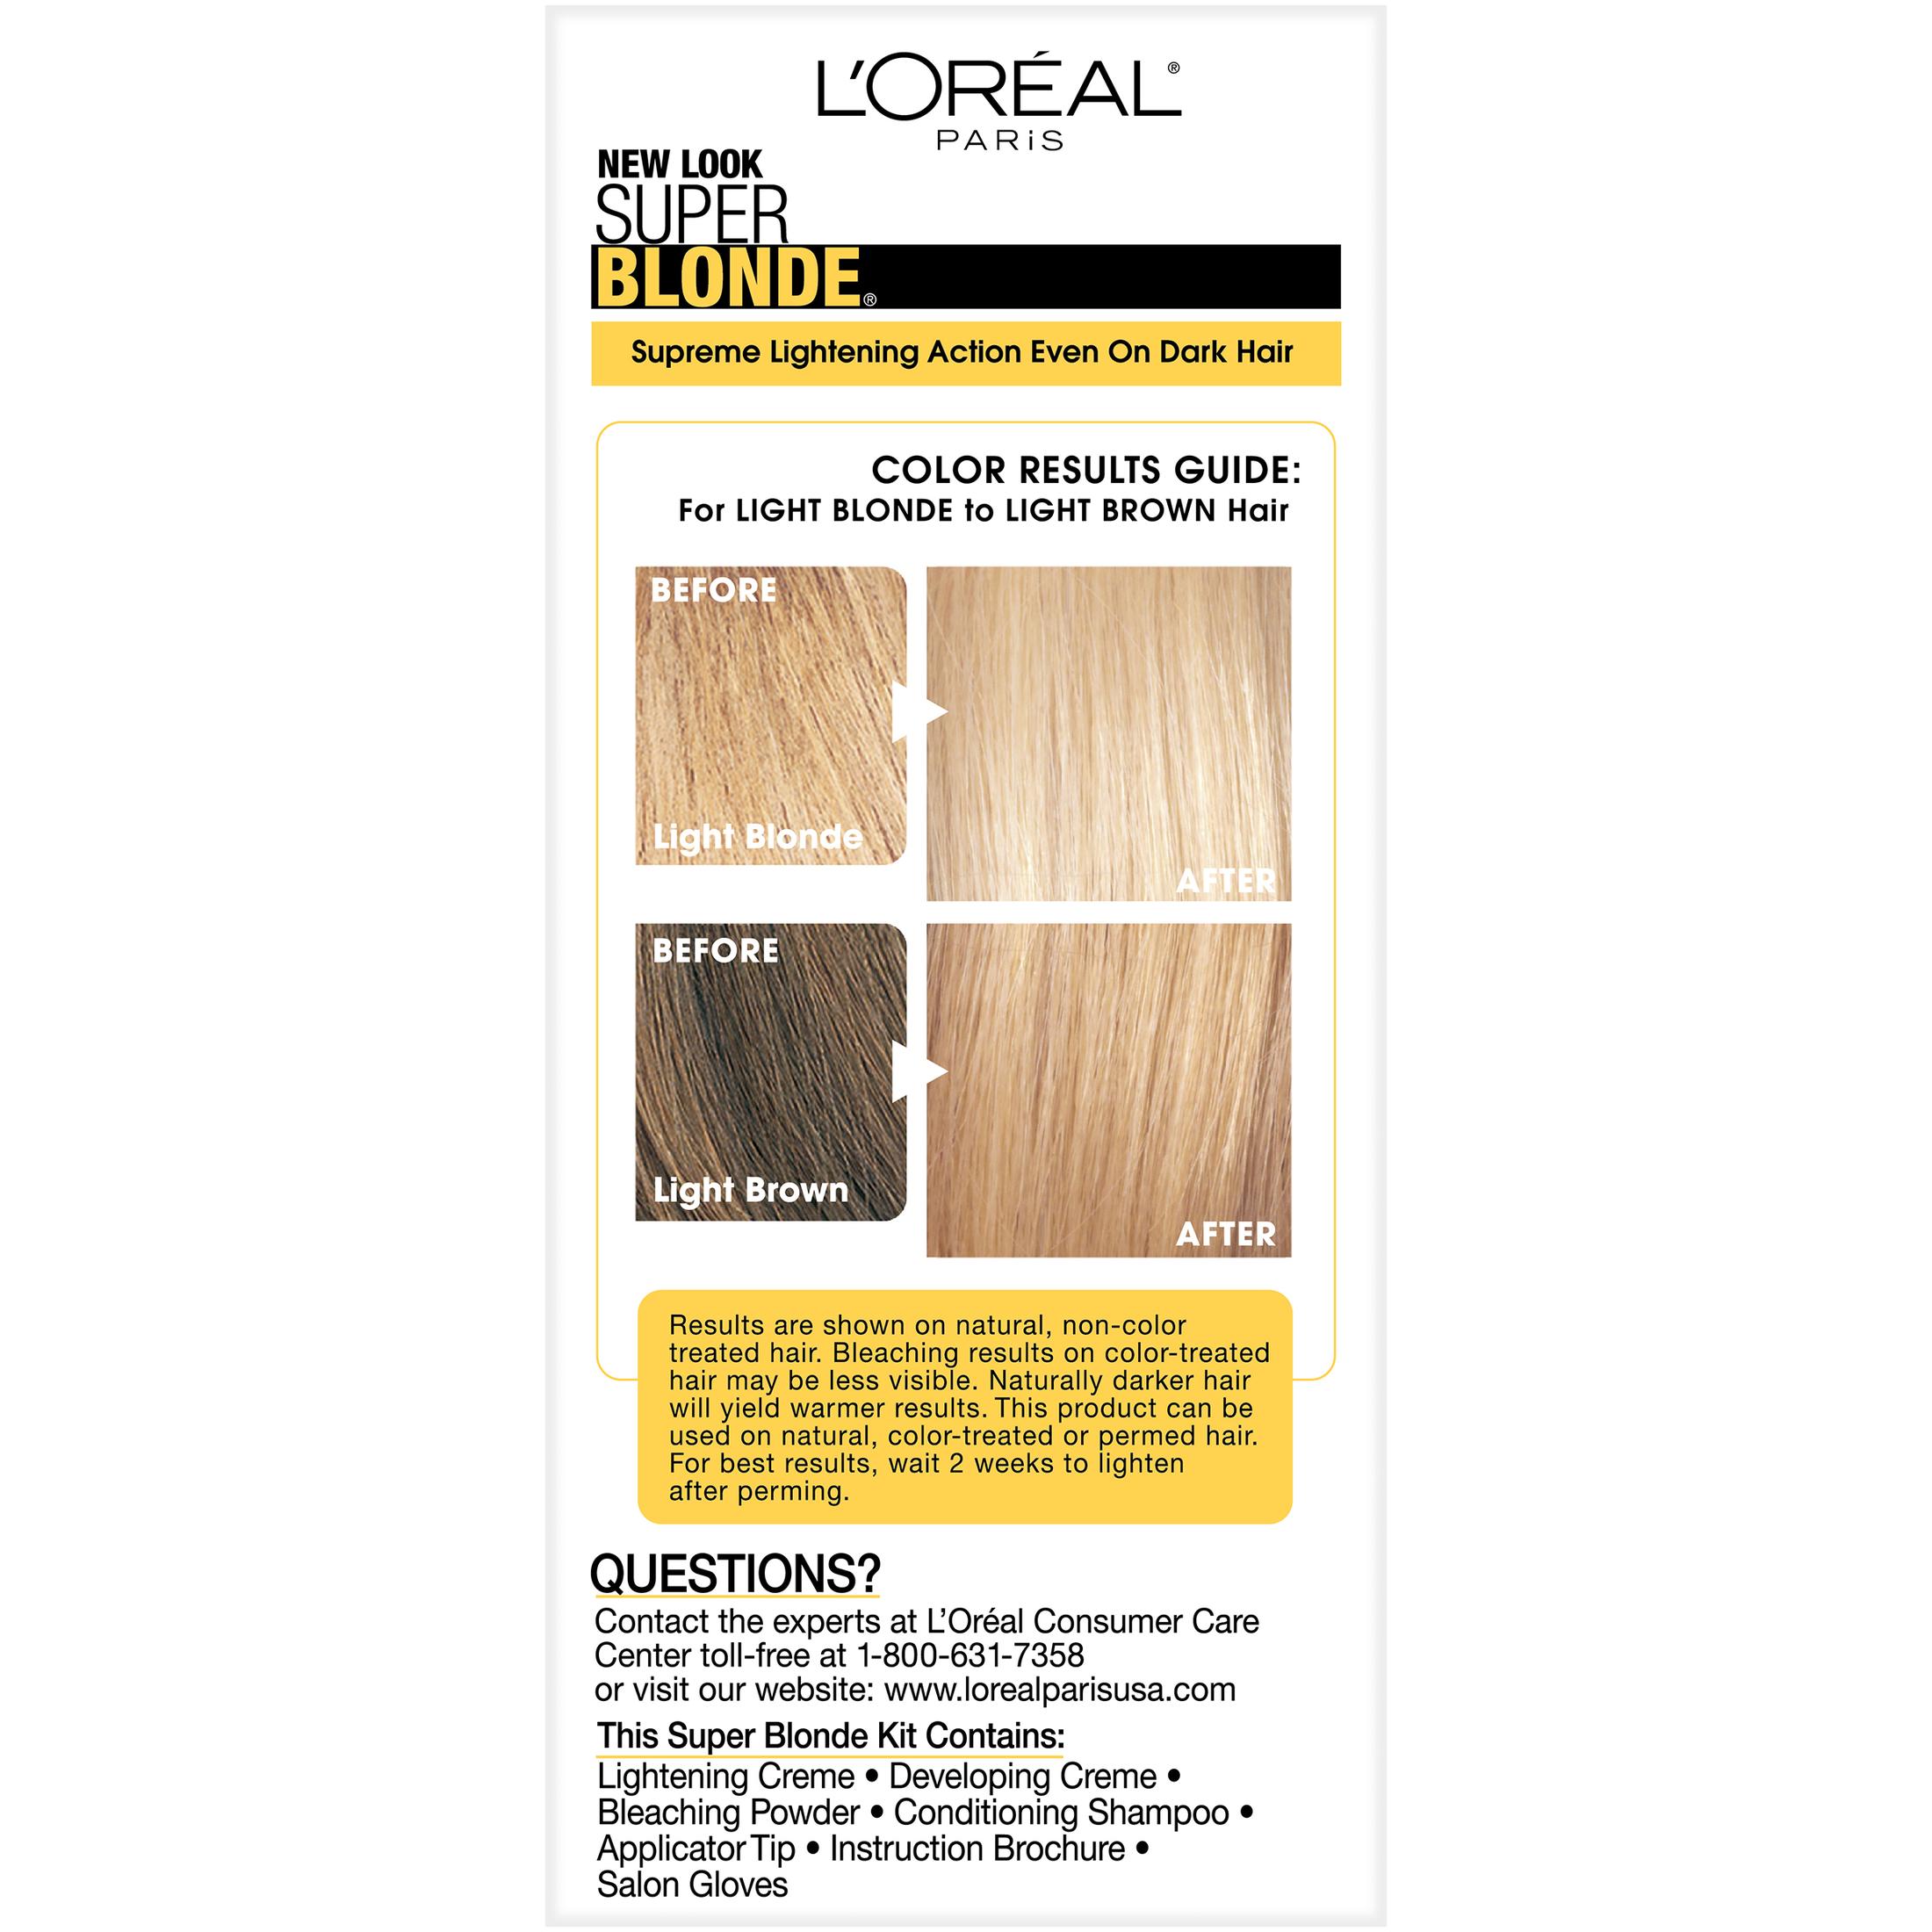 L'Oreal Paris Super Blonde Creme Hair Color Lightening Kit, 205 Light Brown To Light Blonde - image 5 of 6